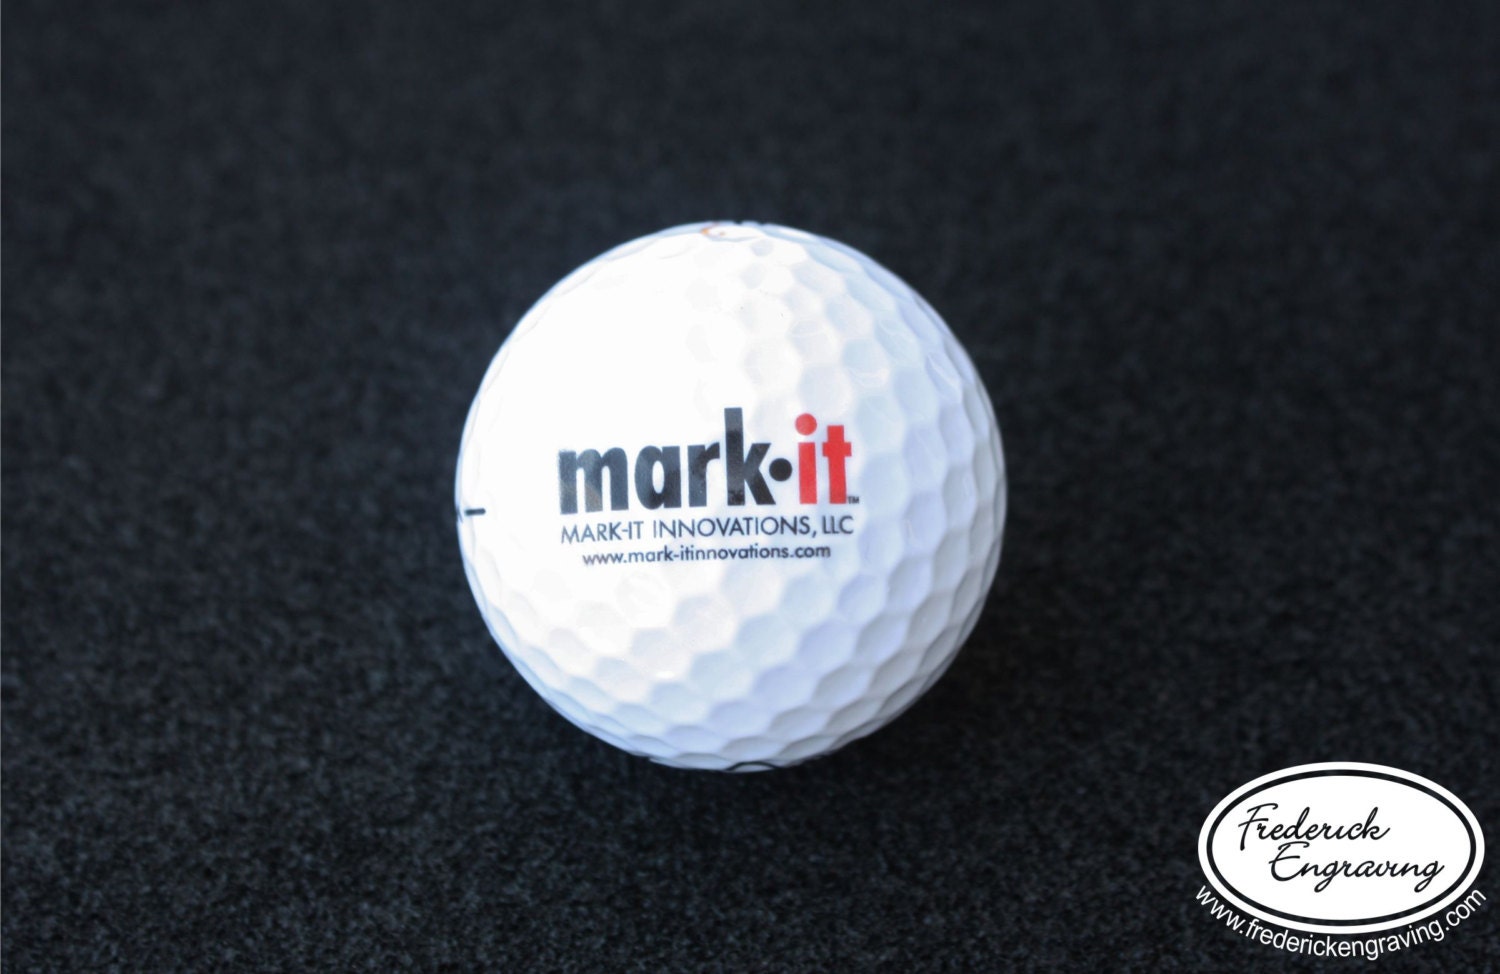 Golf balls with logos printed